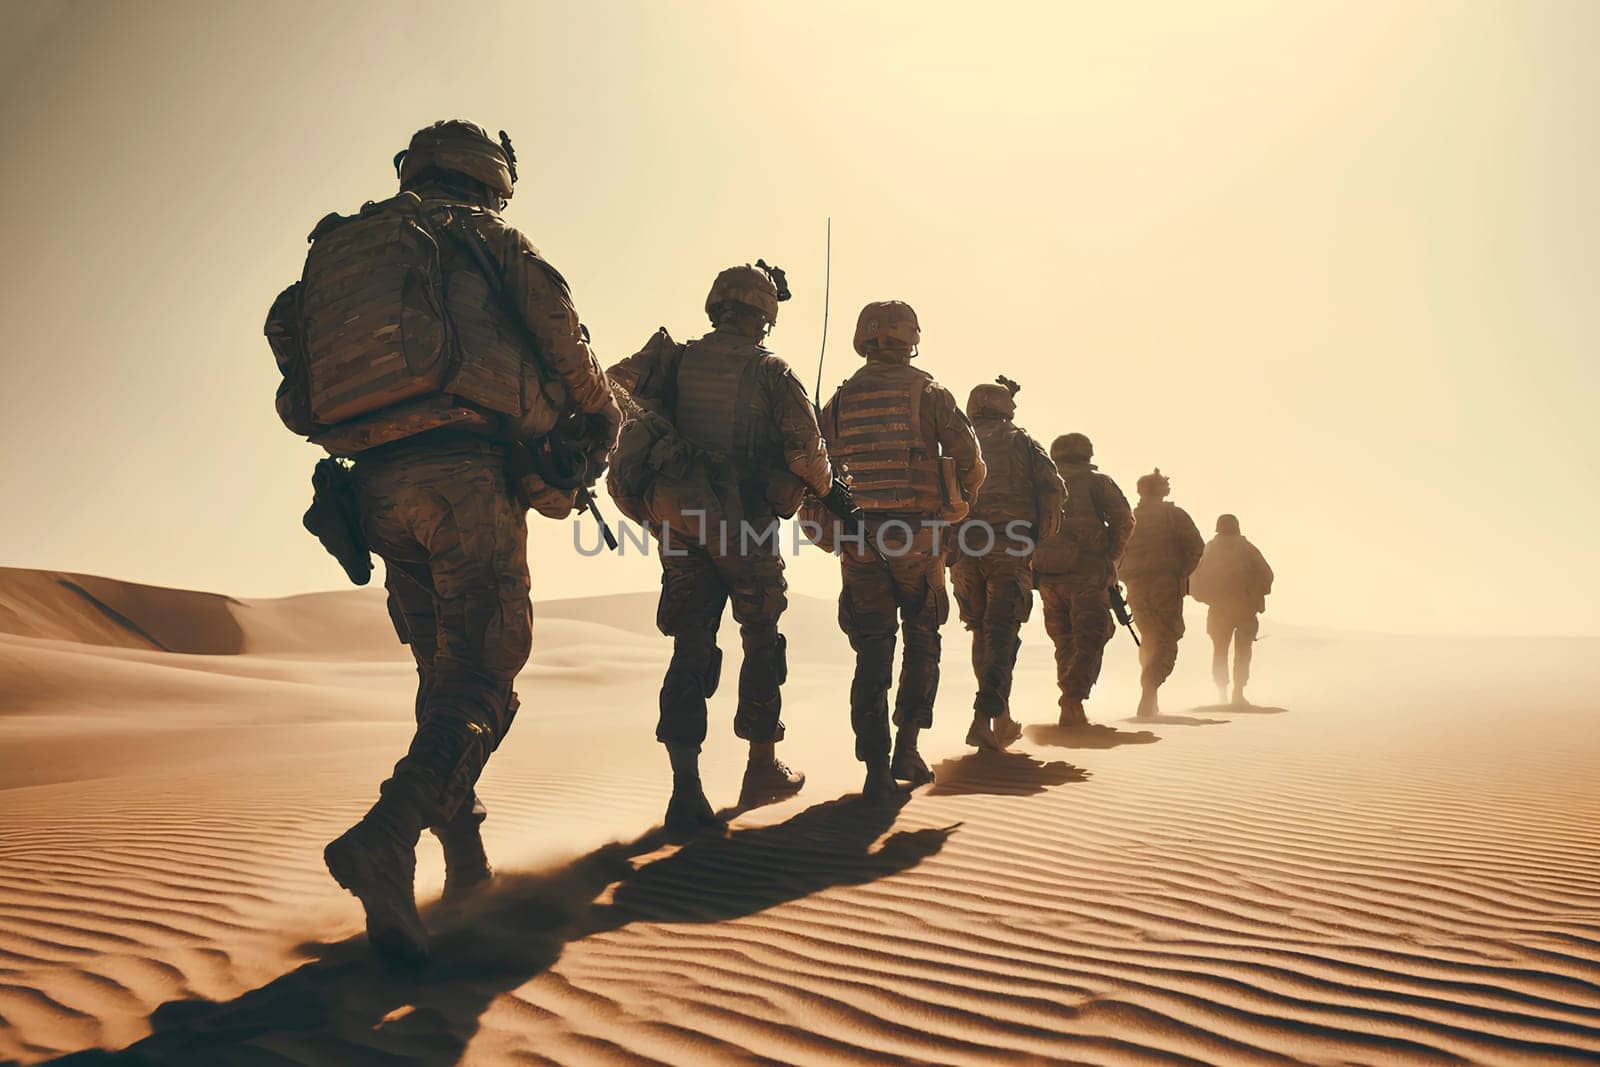 Soldiers in camouflage uniforms with machine guns walk through the desert under the scorching sun.